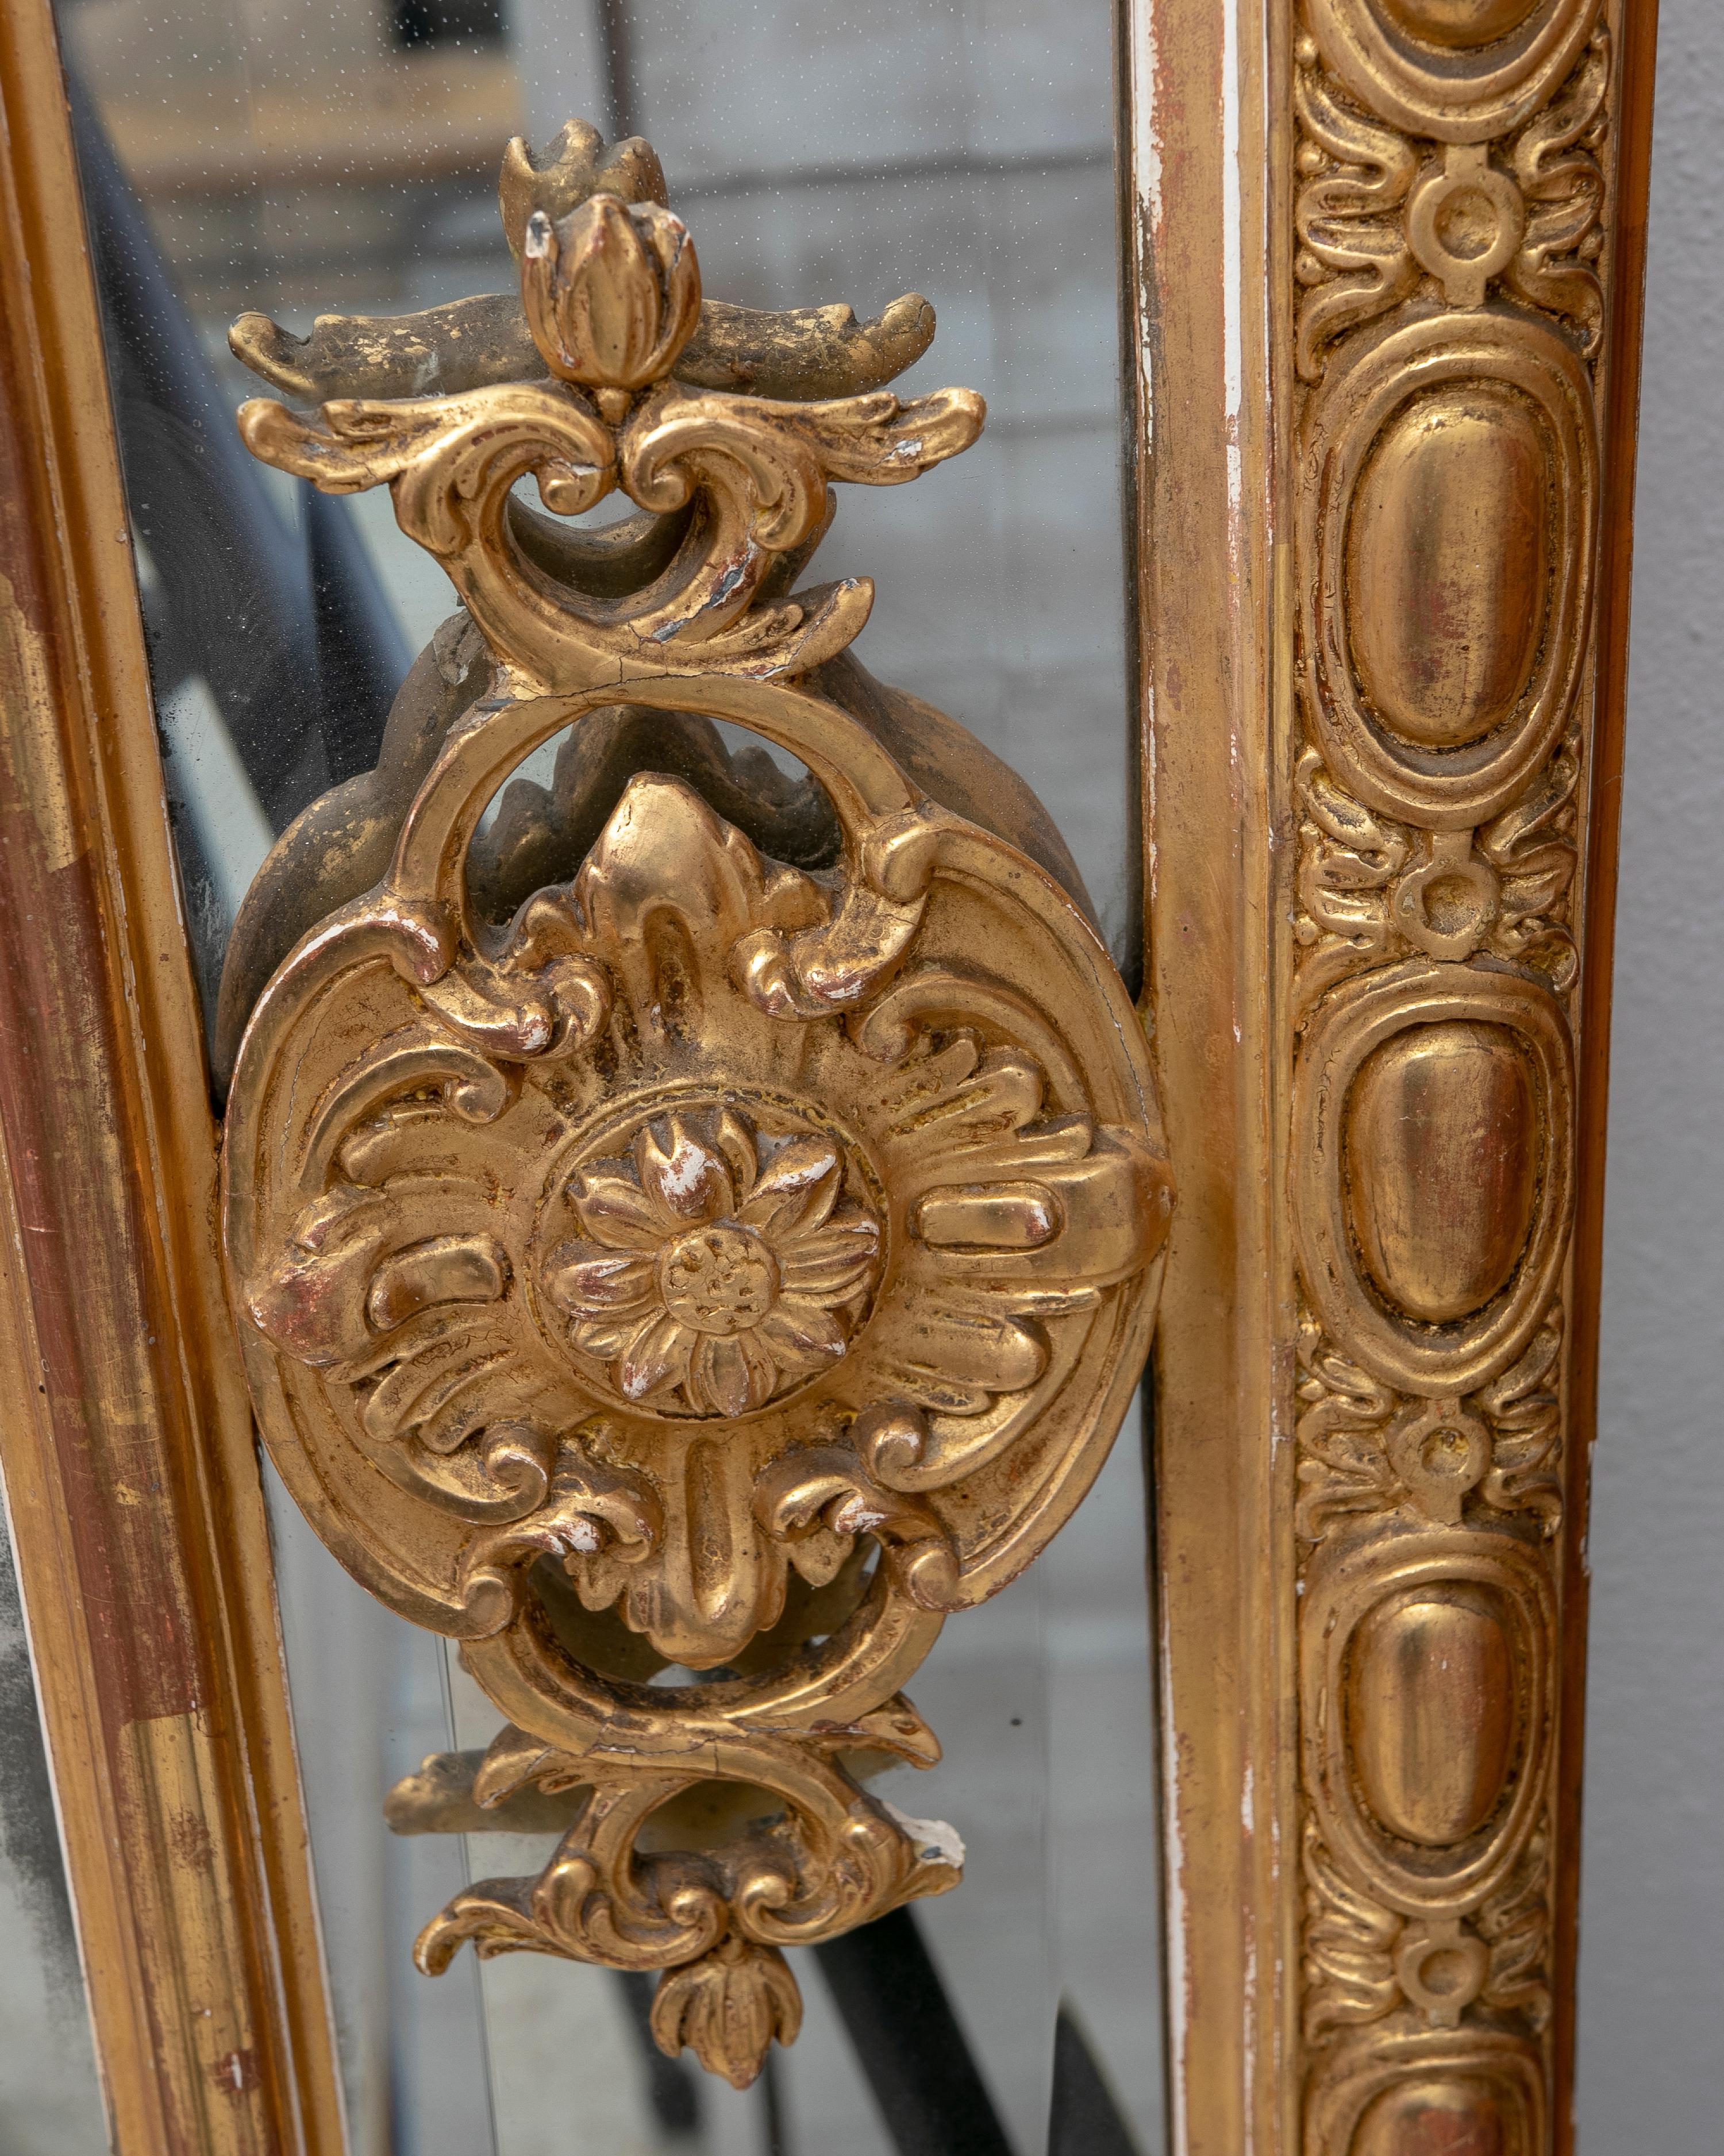 1850s French Gold Giltwood Wall Mirror w/ Acanthus Leaf Scrolls Decoration 6